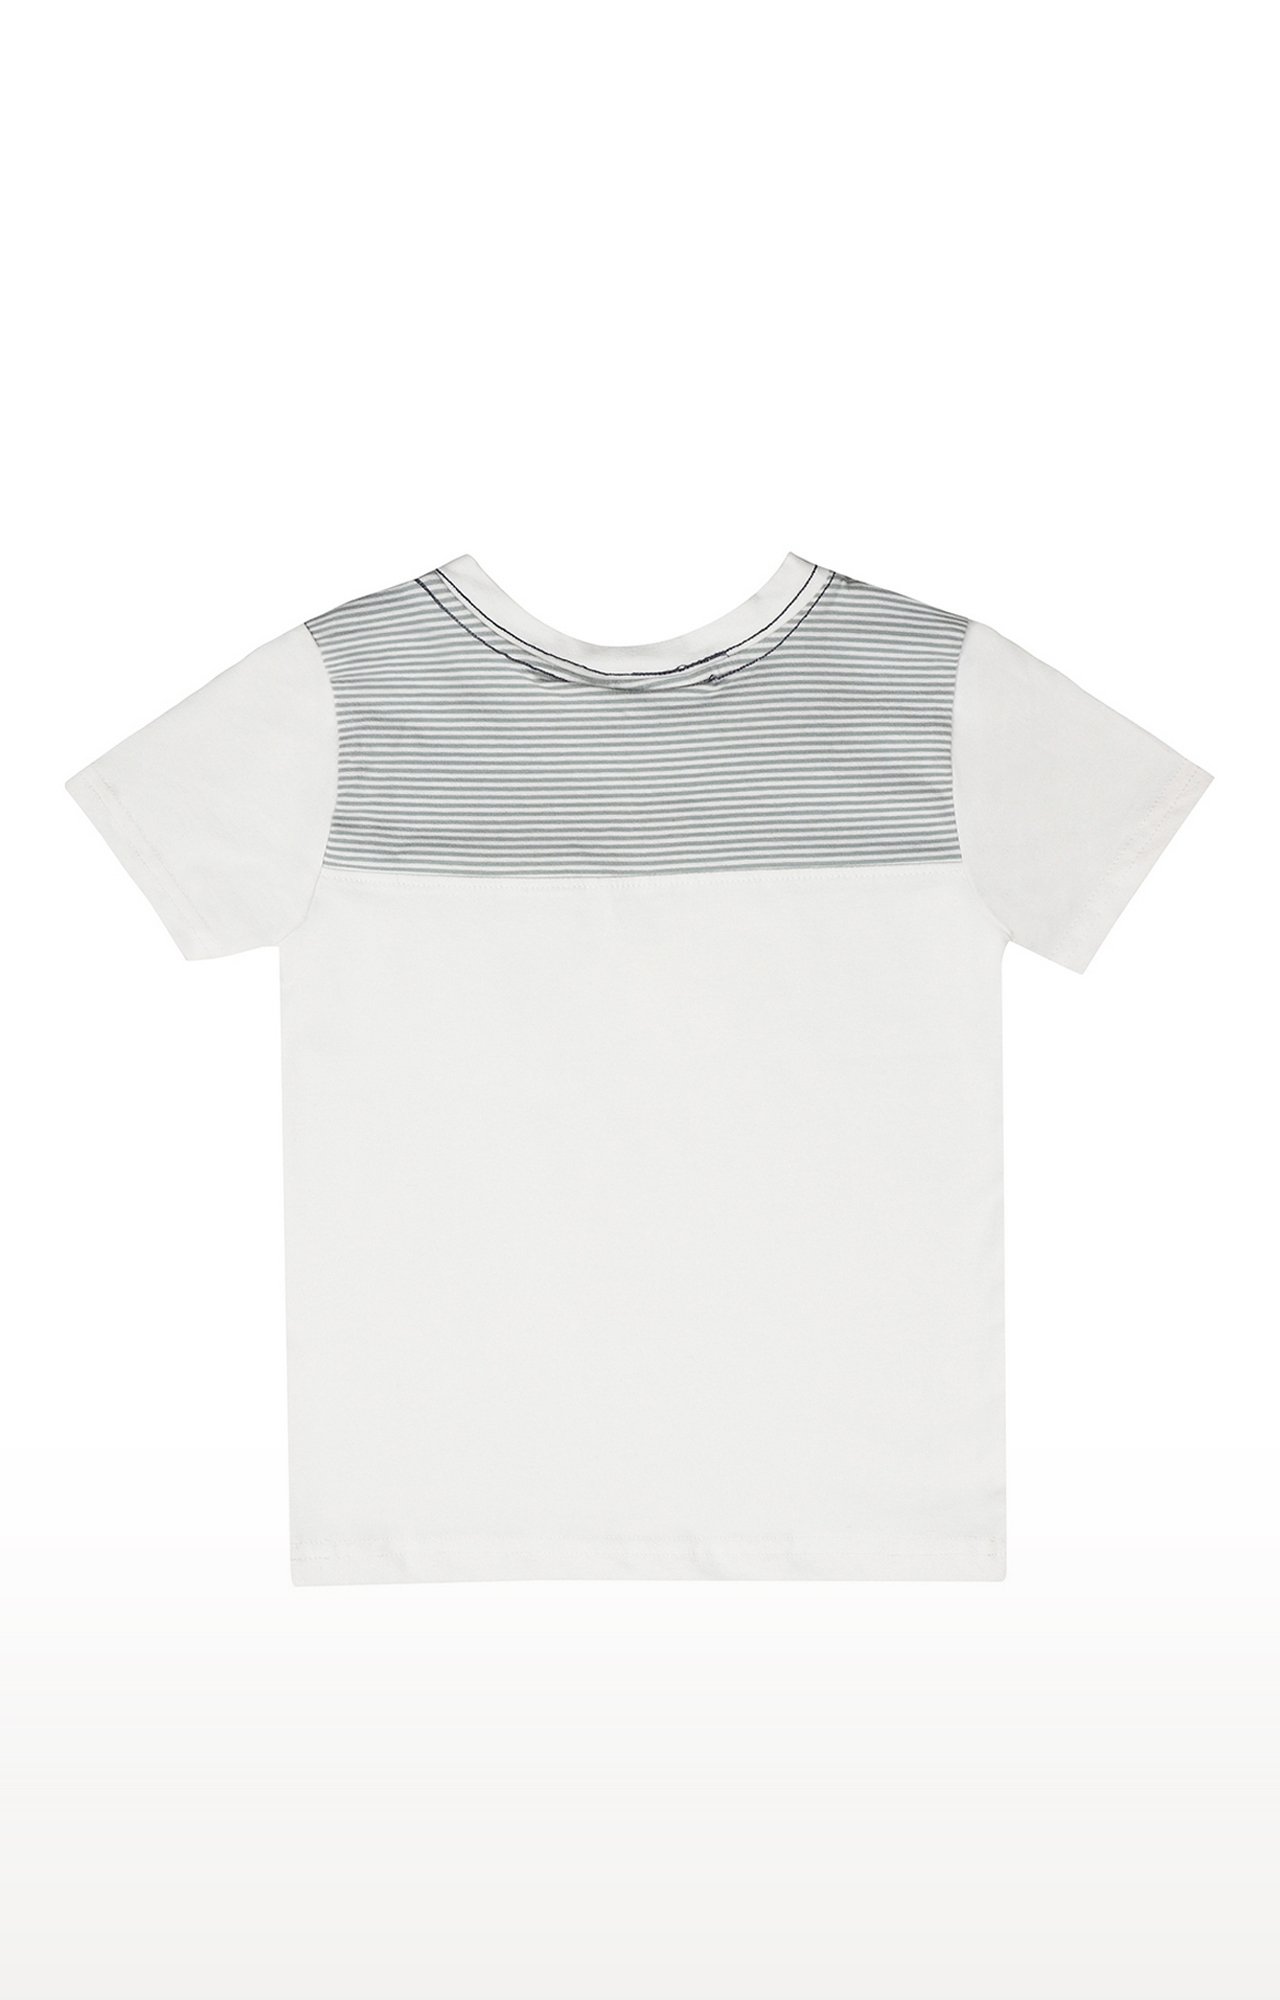 Popsicles Clothing | Popsicles Soft Cotton Comfort fit V-Neck Short Sleeves Boys T-Shirt - Off White (0-6M) 1